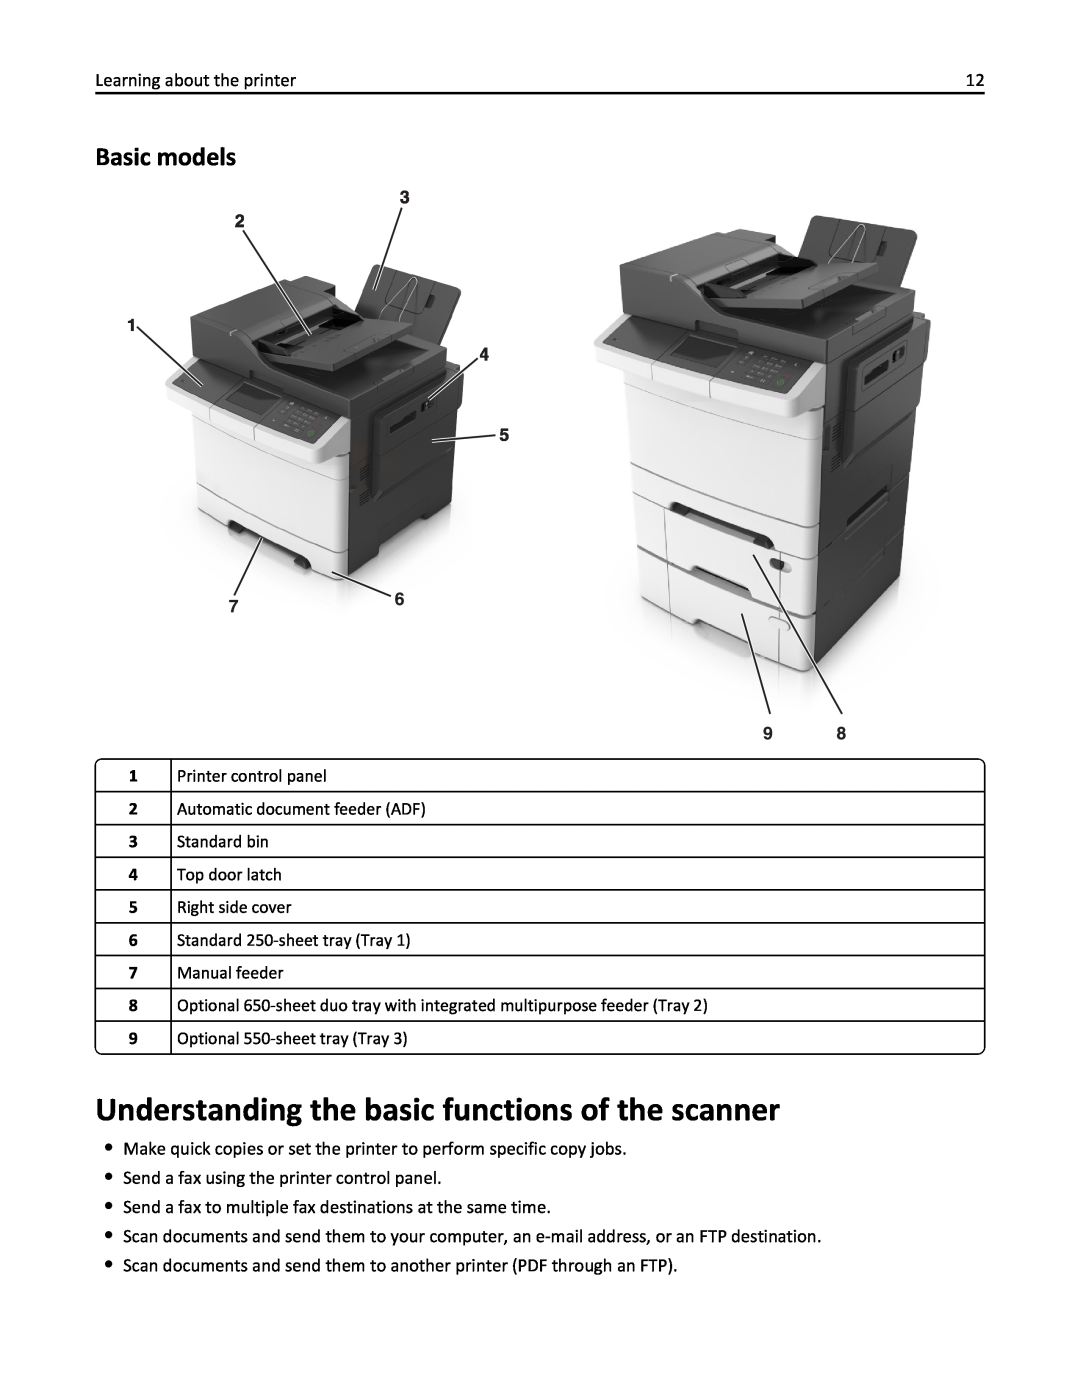 Lexmark 436 manual Understanding the basic functions of the scanner, Basic models 